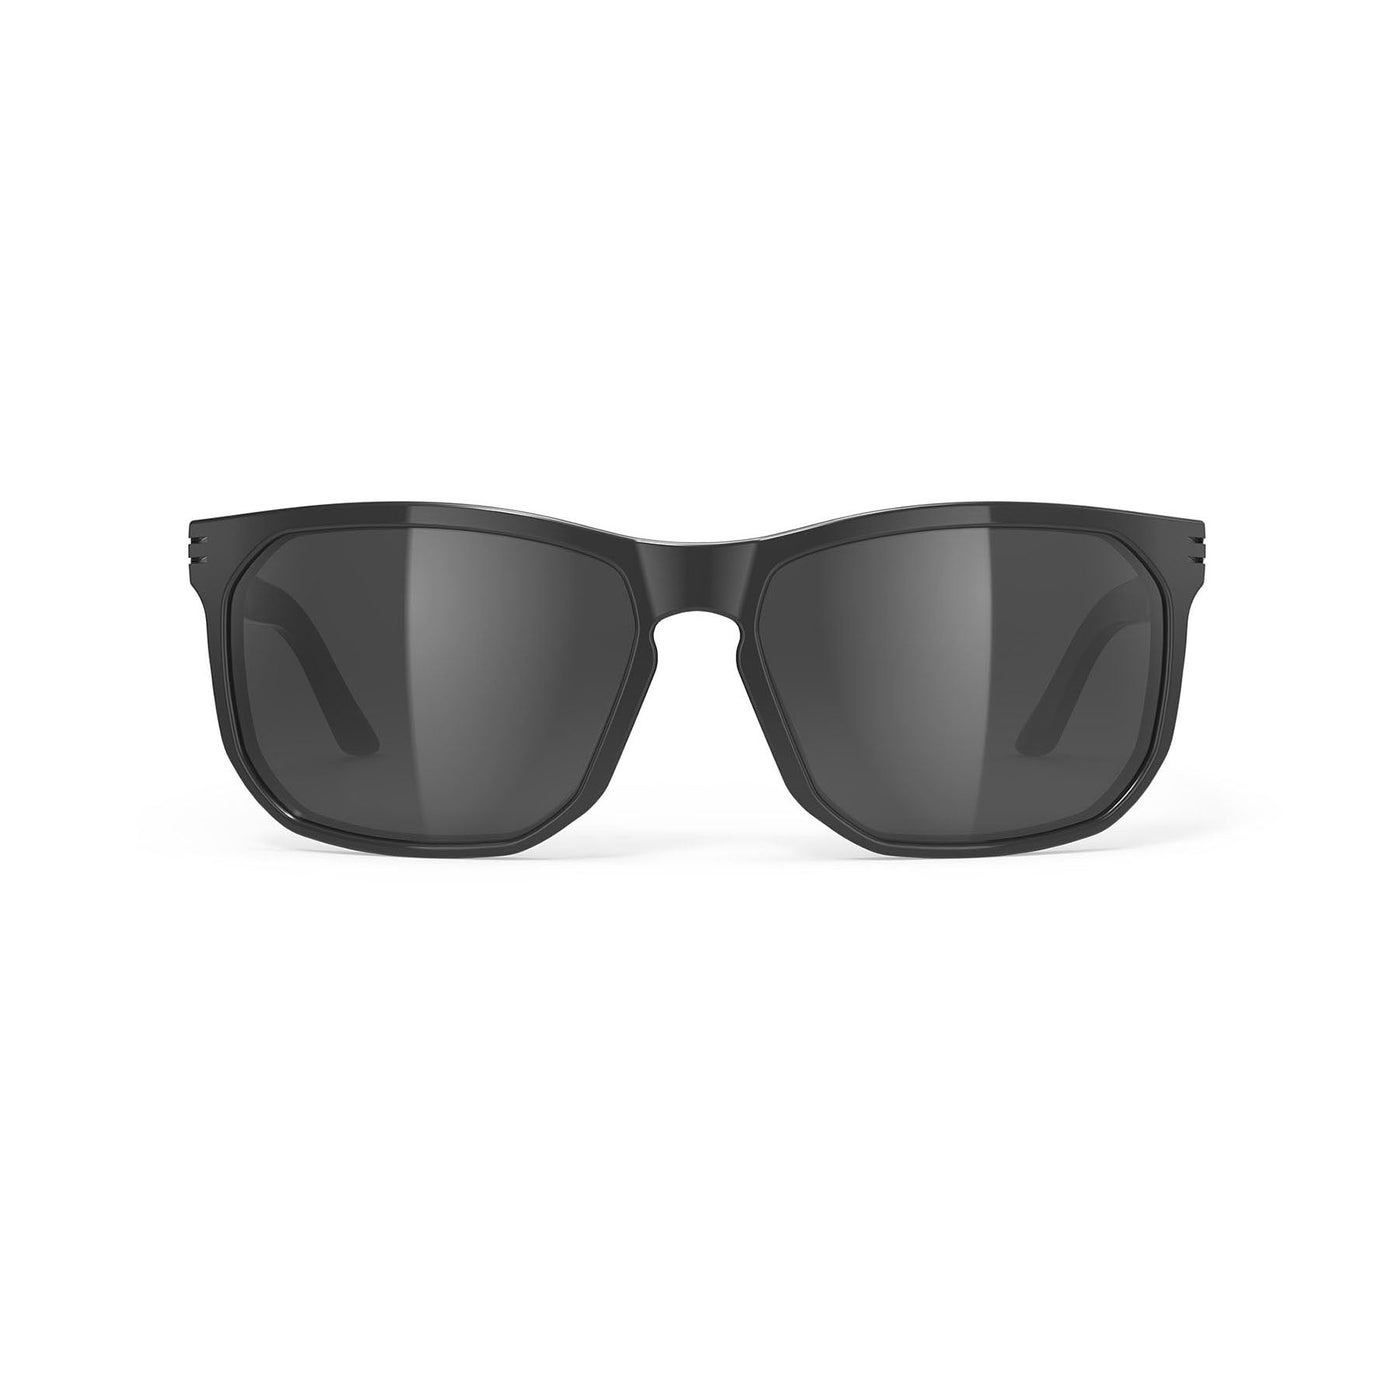 Rudy Project Soundrise lifestyle and beach prescription sunglasses#color_soundrise-black-gloss-with-smoke-black-lenses